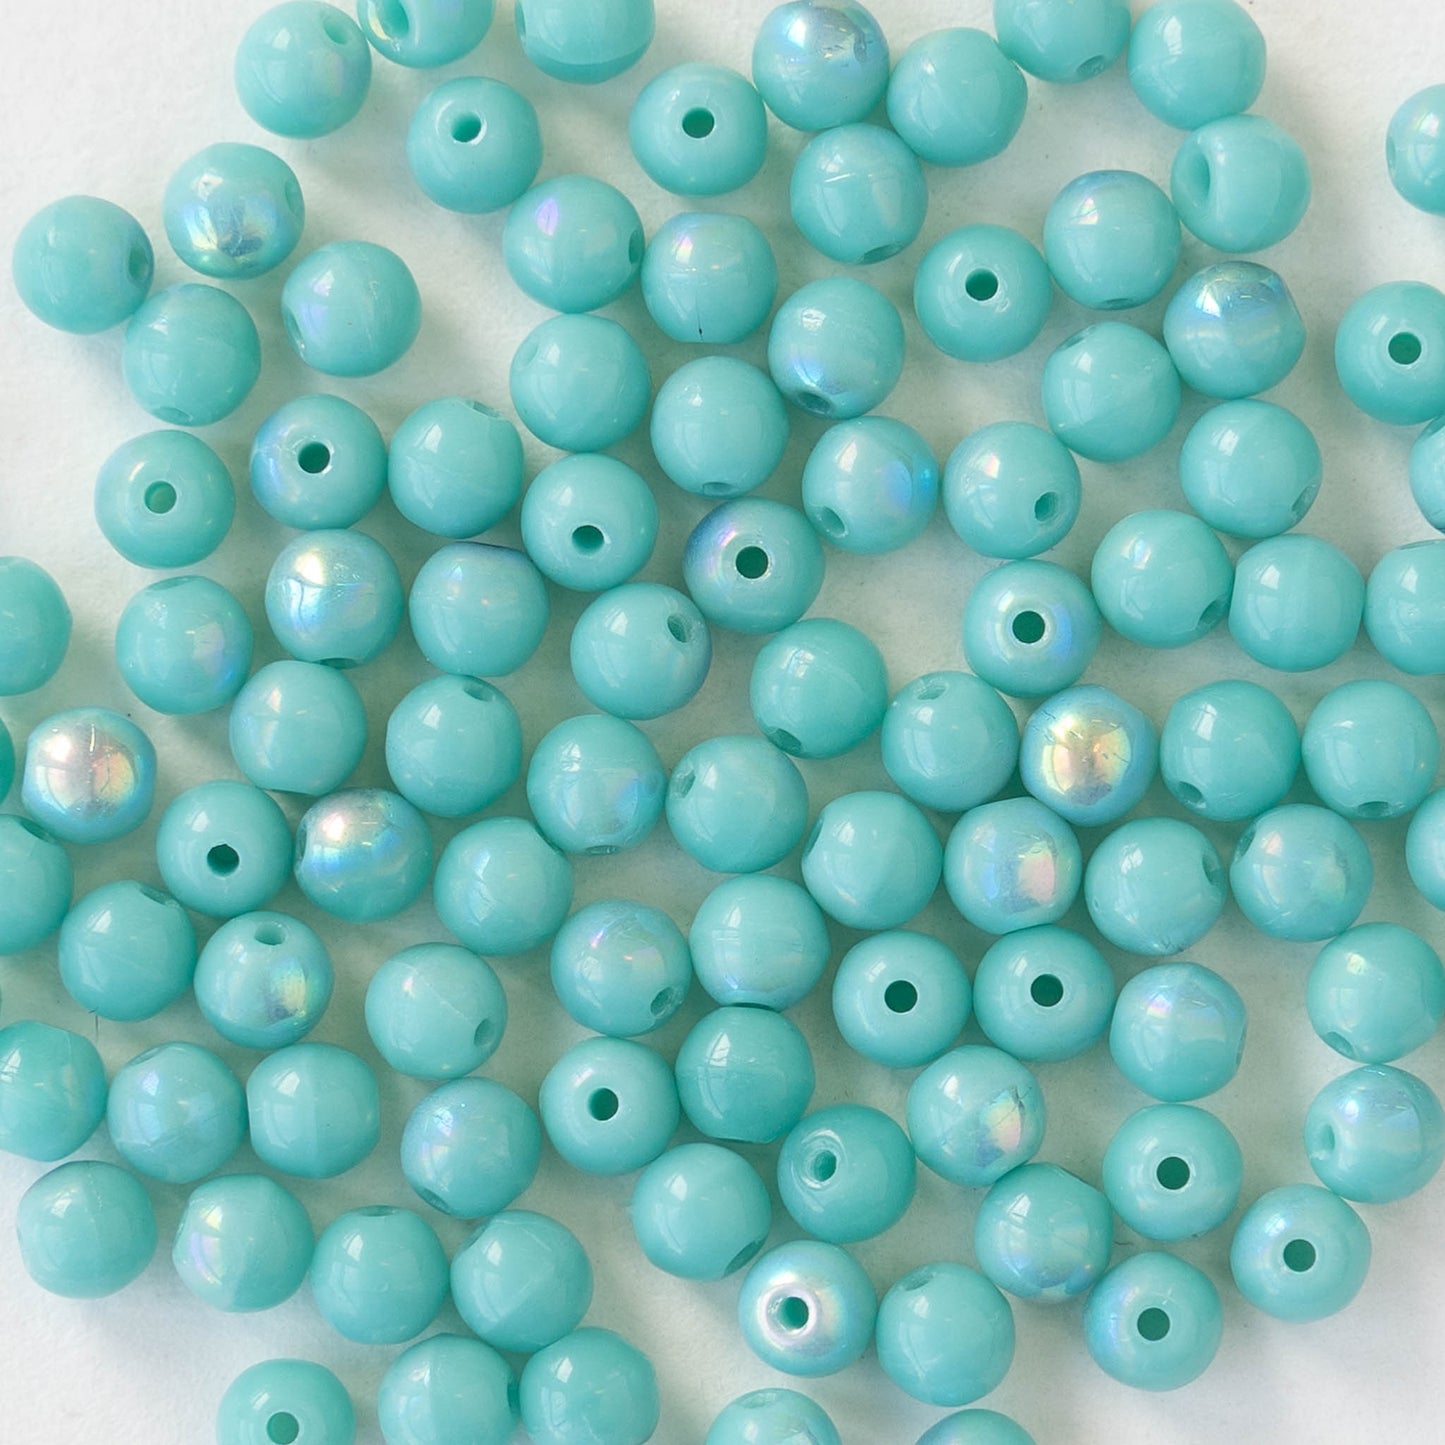 4mm Round Glass Beads - Seafoam Shine - 100 Beads